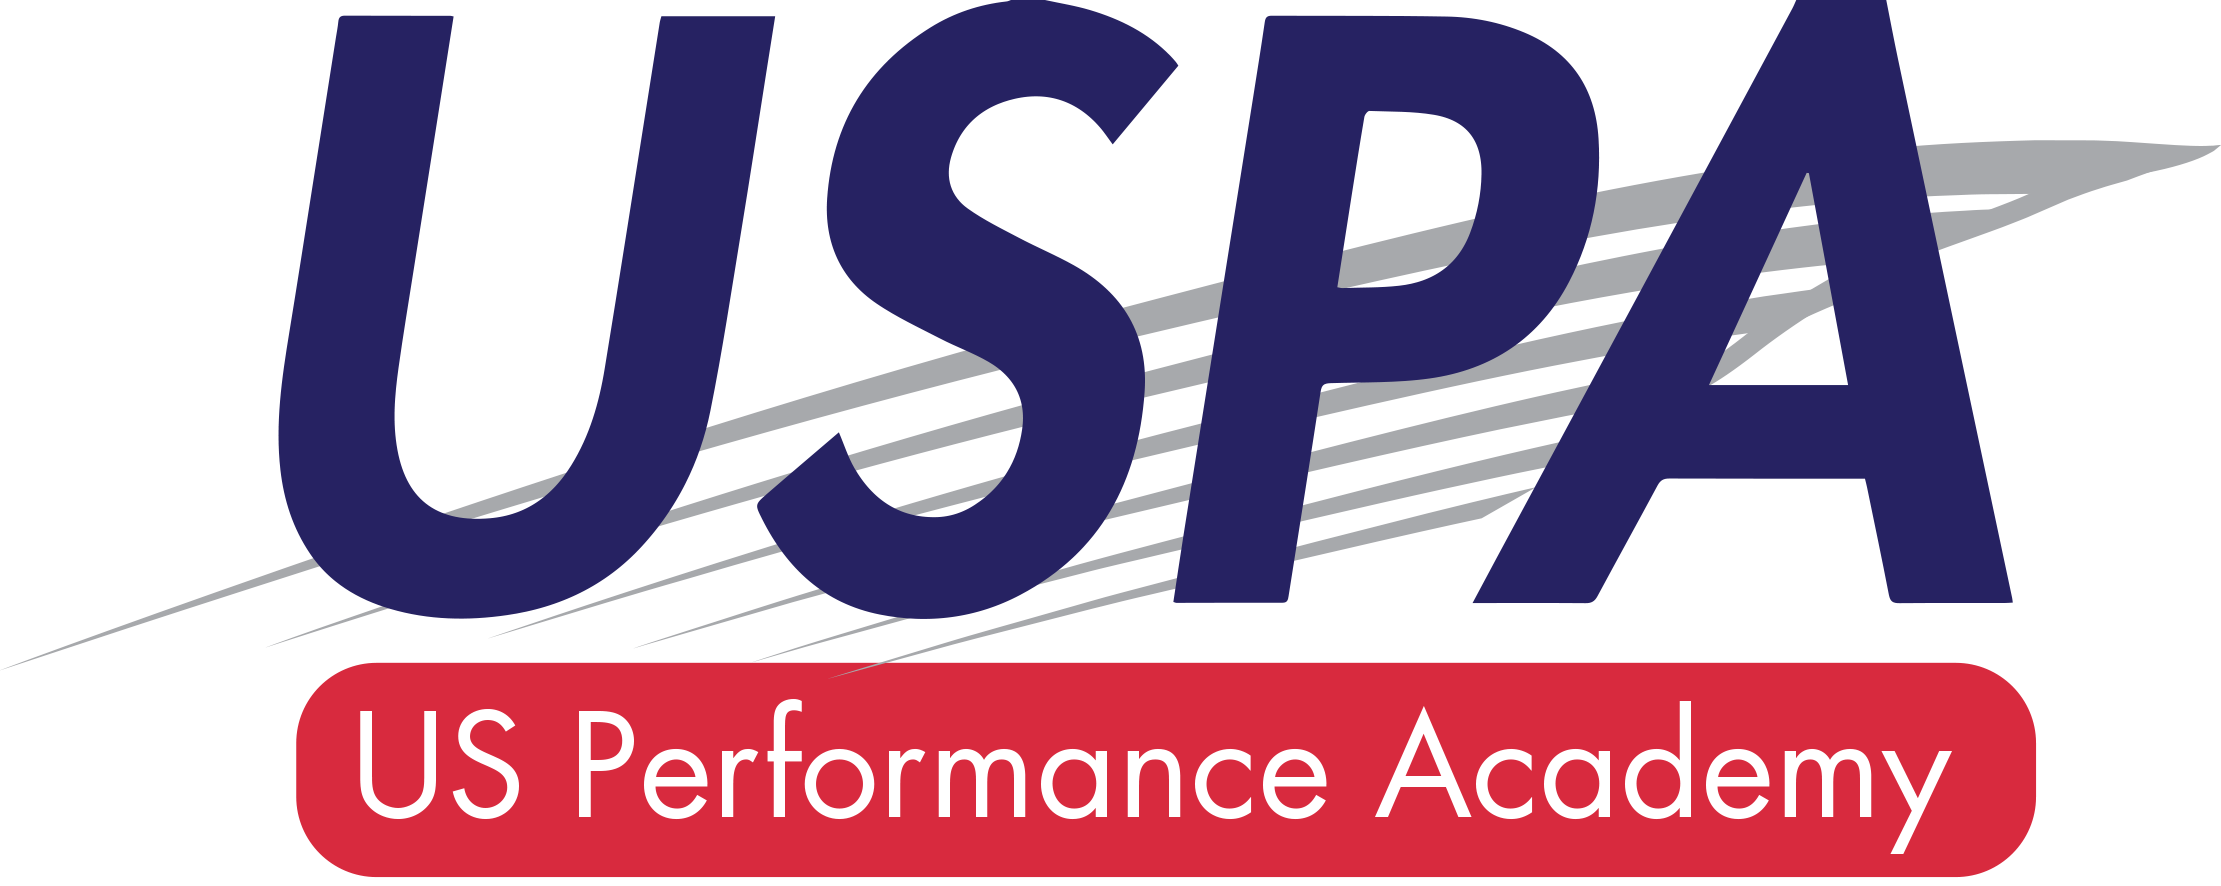 US Performance Academy Earns Accreditation